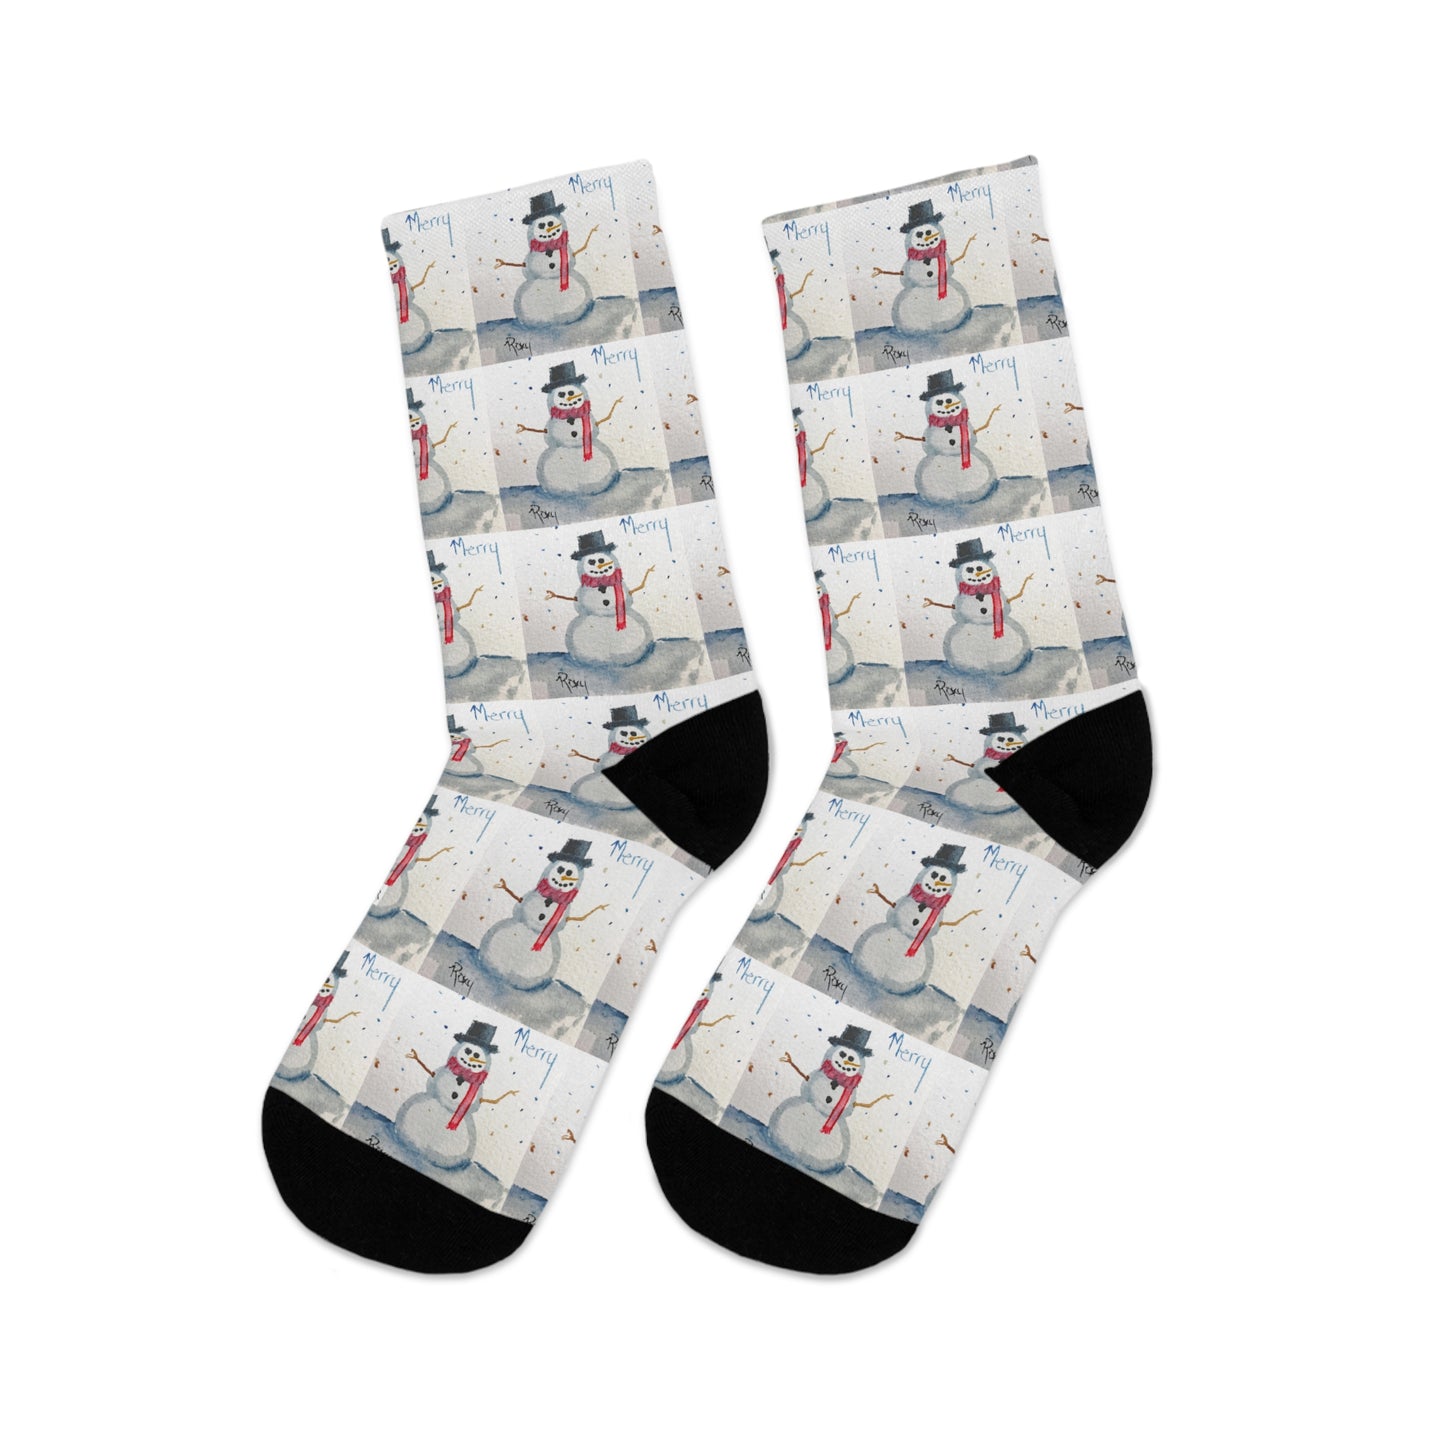 Merry Snowman Socks